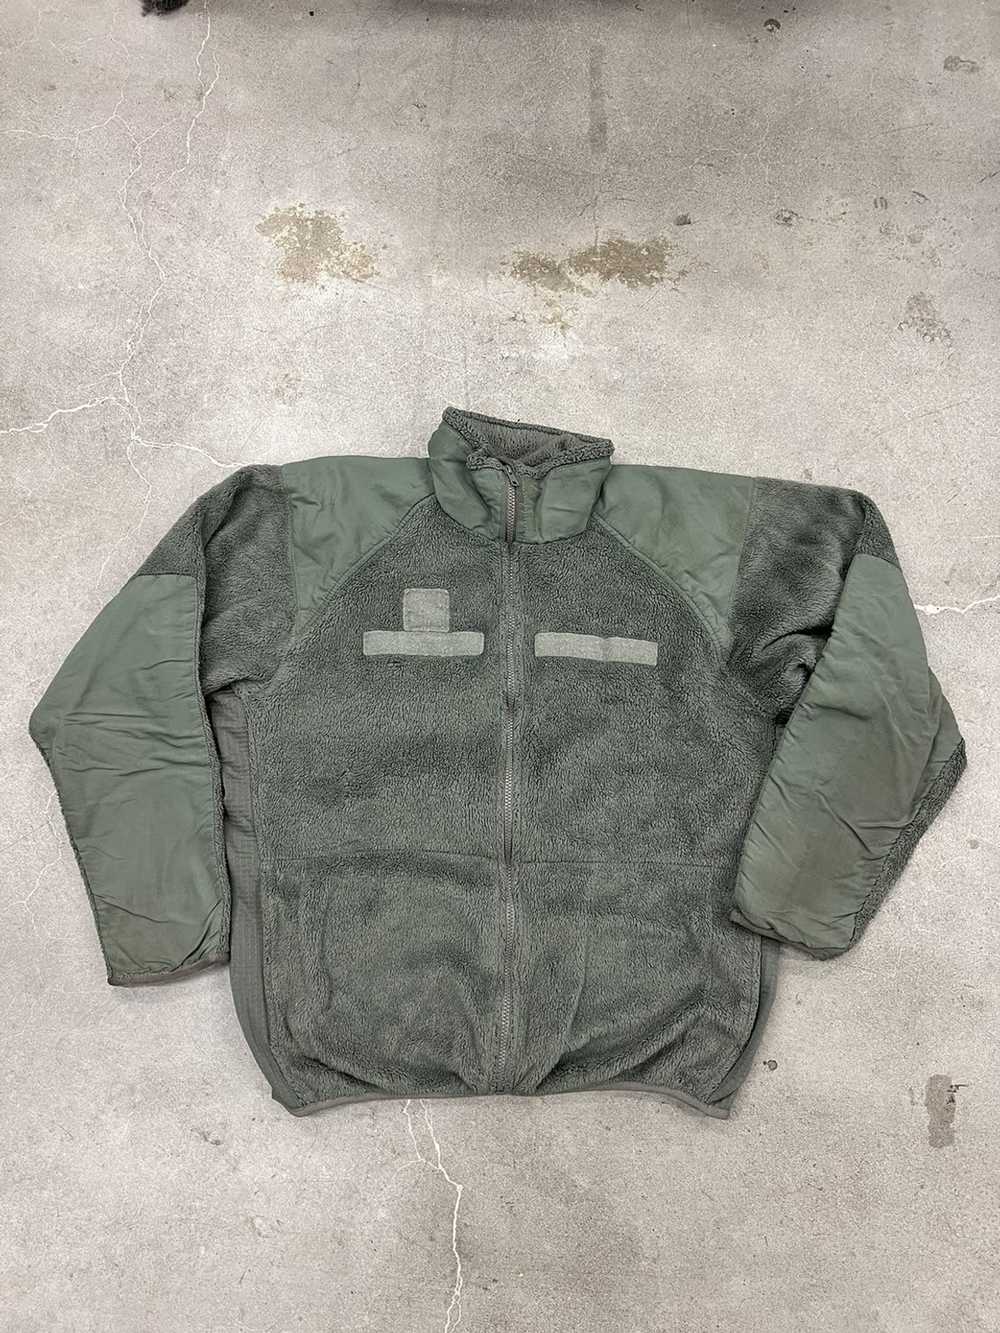 Military × Streetwear × Vintage Military fleece z… - image 2